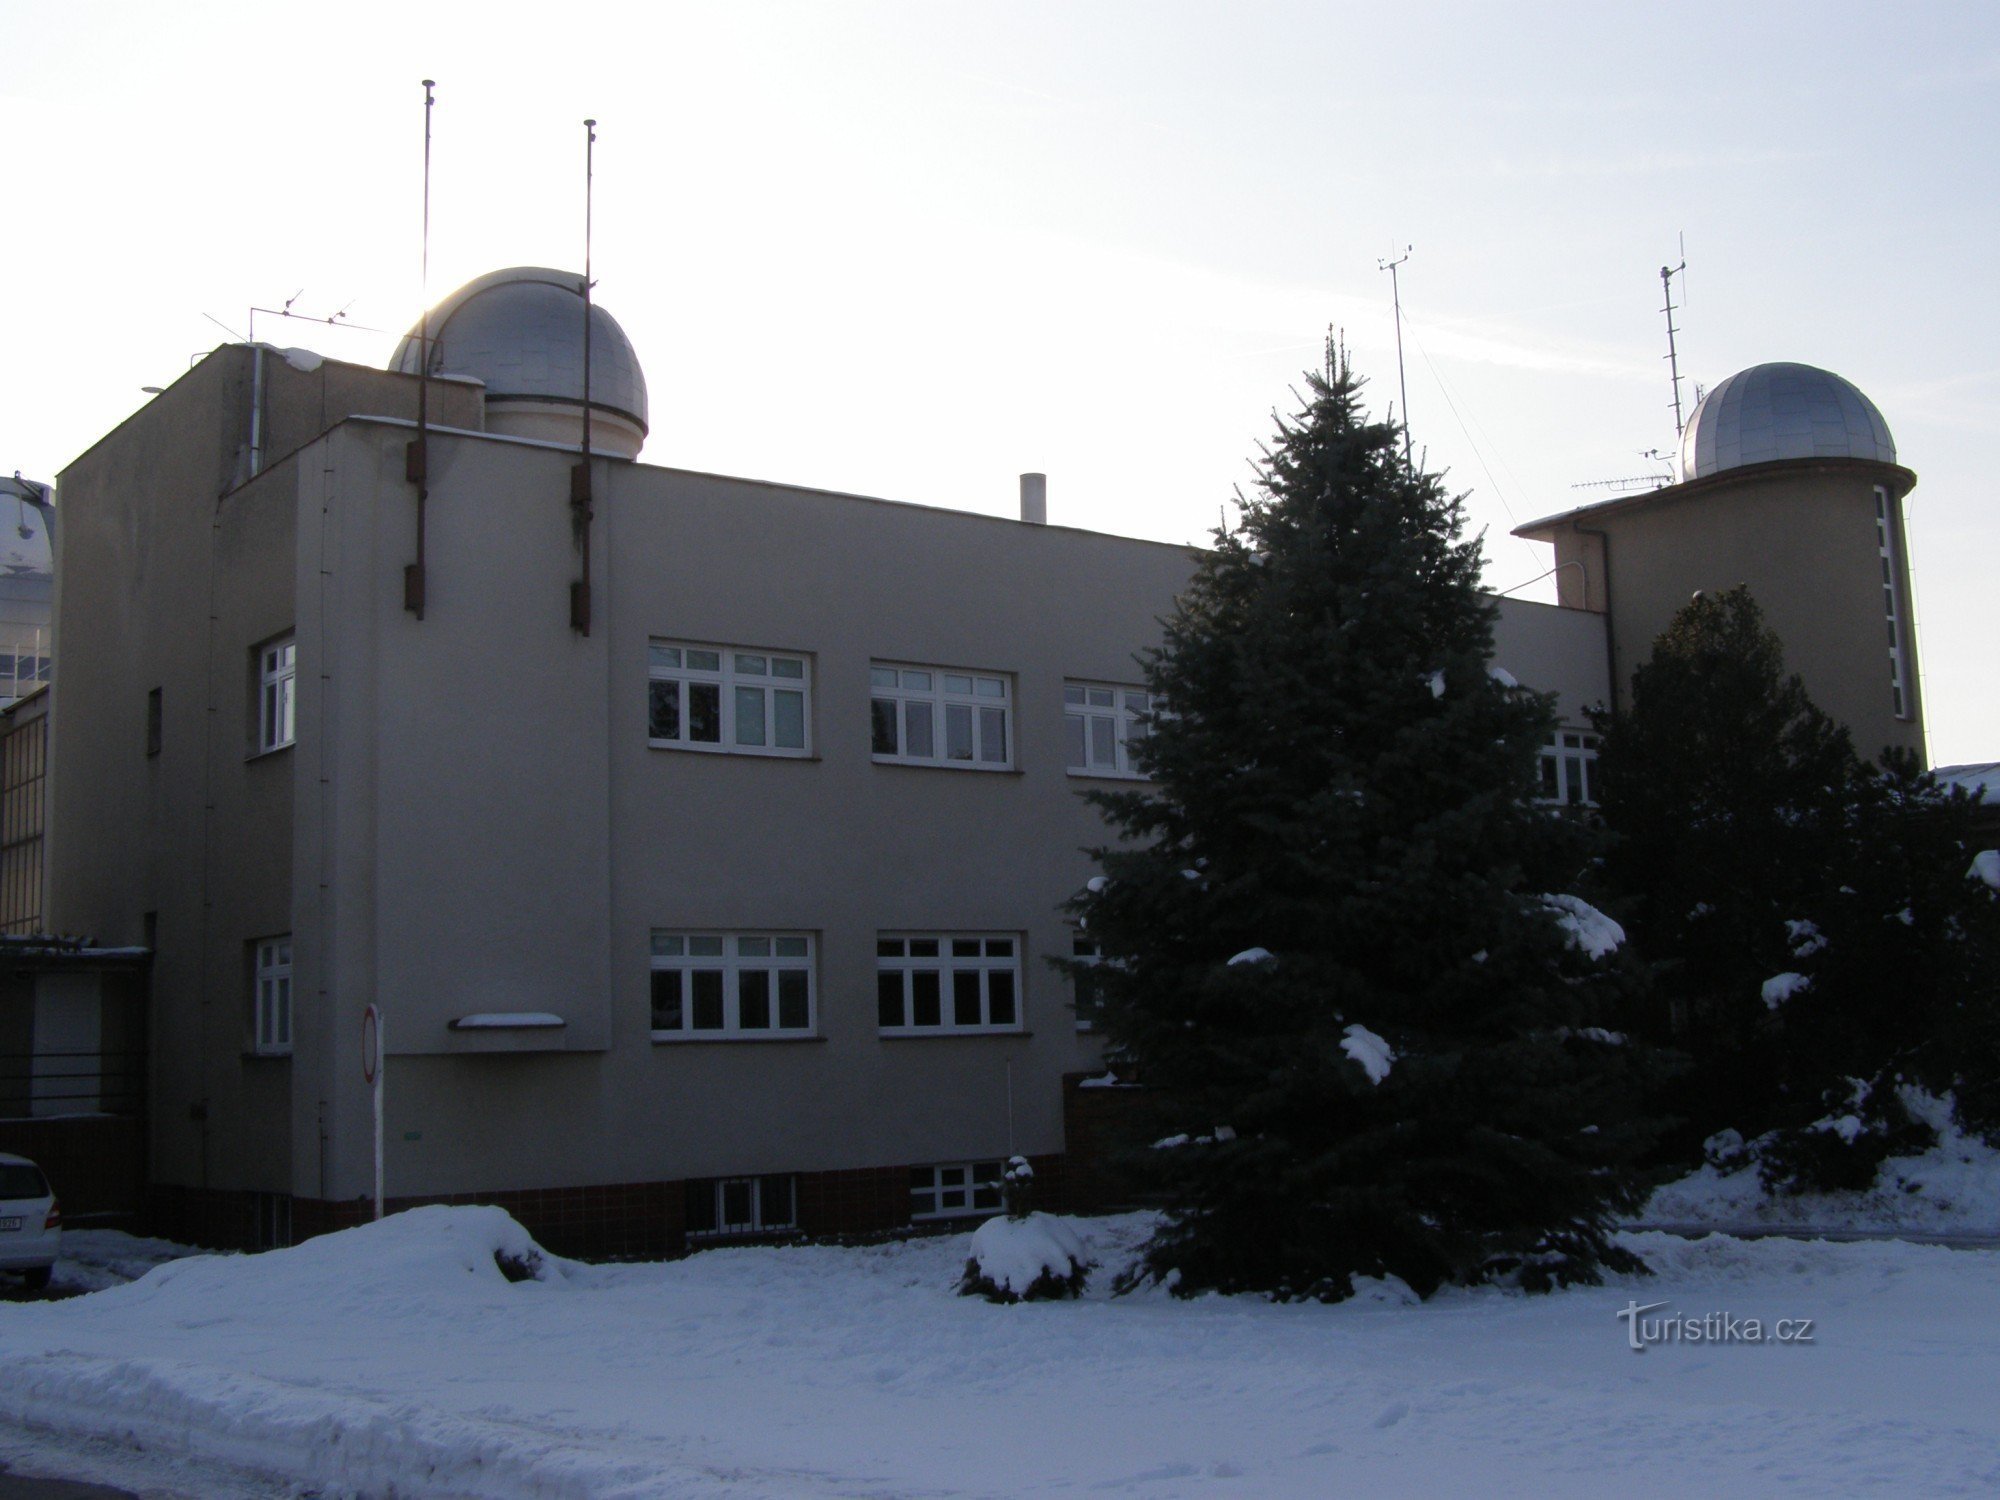 Hradec Králové - observatorium och planetarium